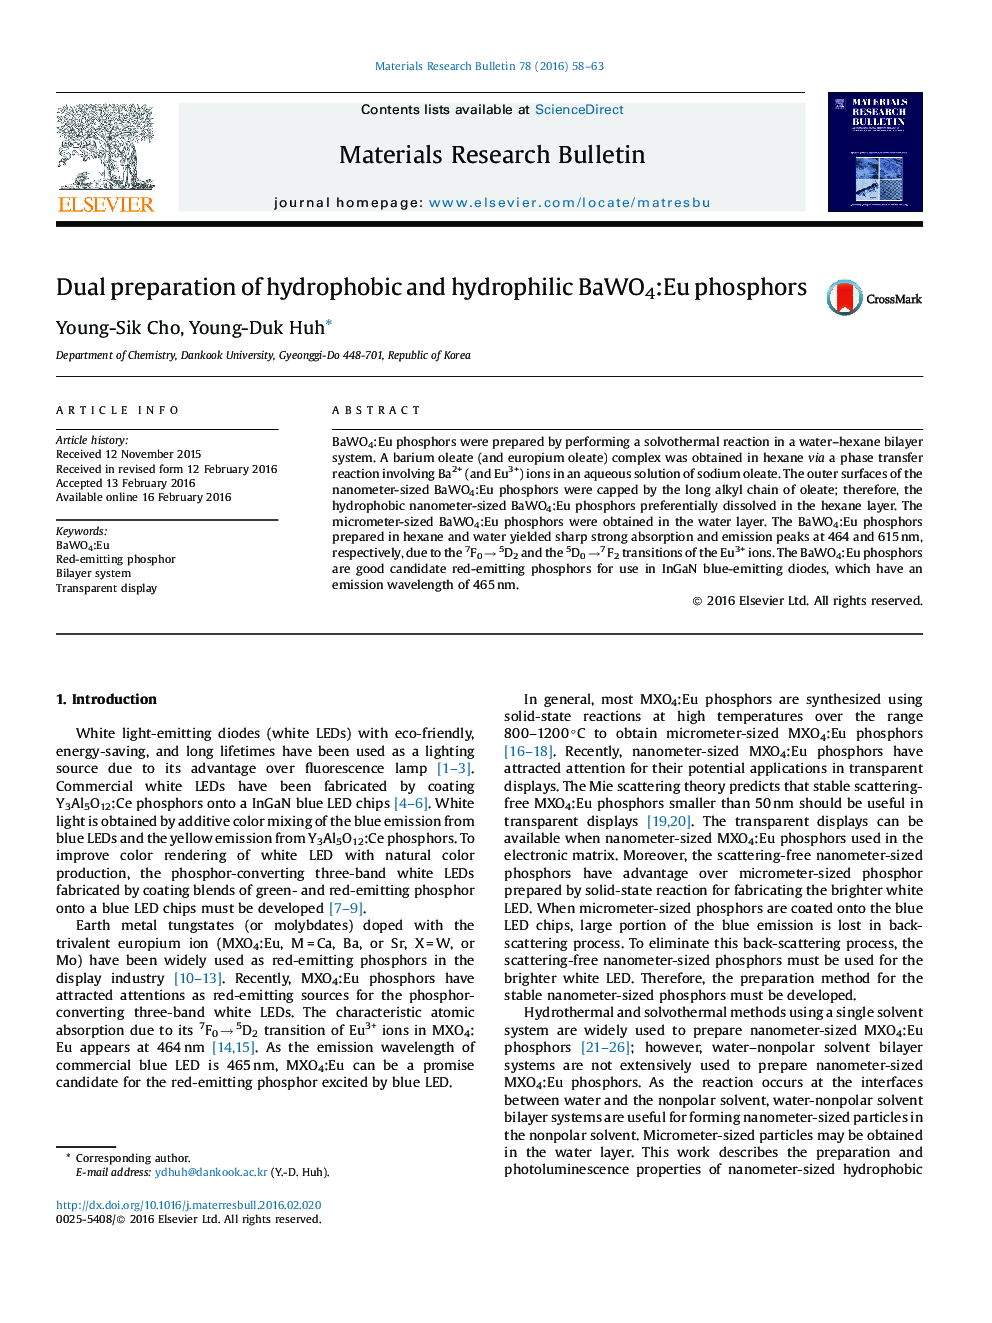 Dual preparation of hydrophobic and hydrophilic BaWO4:Eu phosphors